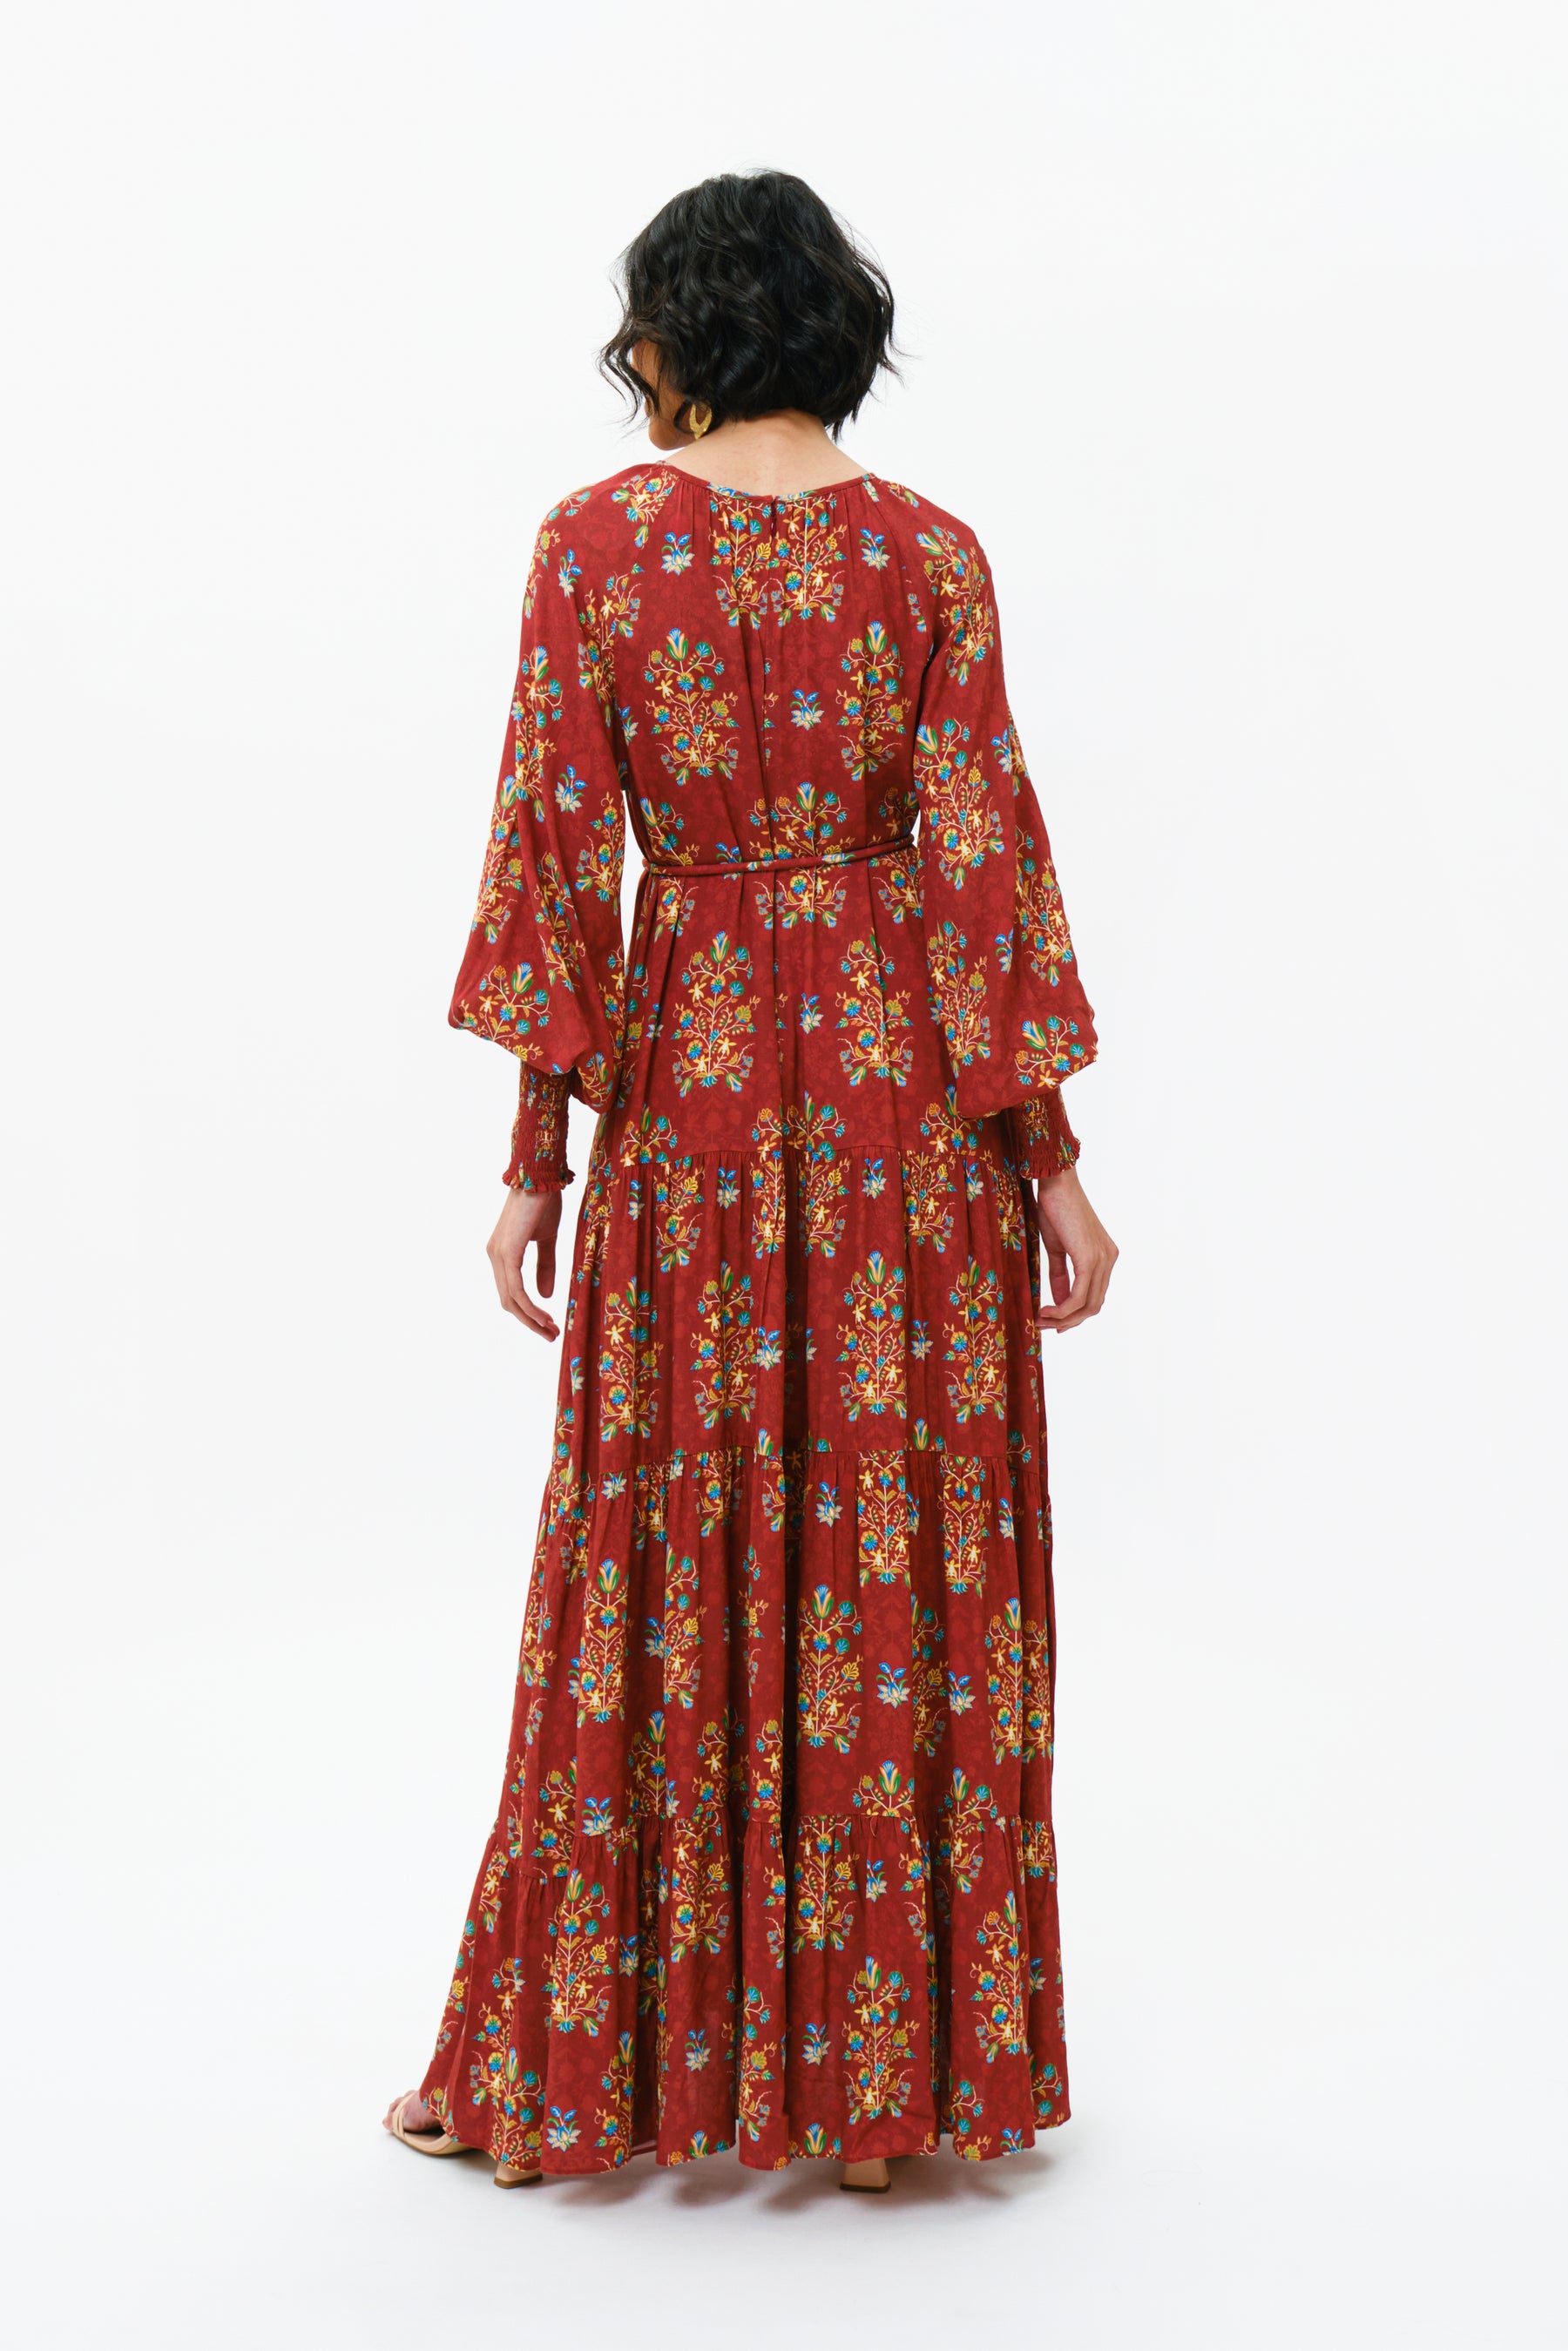 ARUNI Dress in Red Anggrek